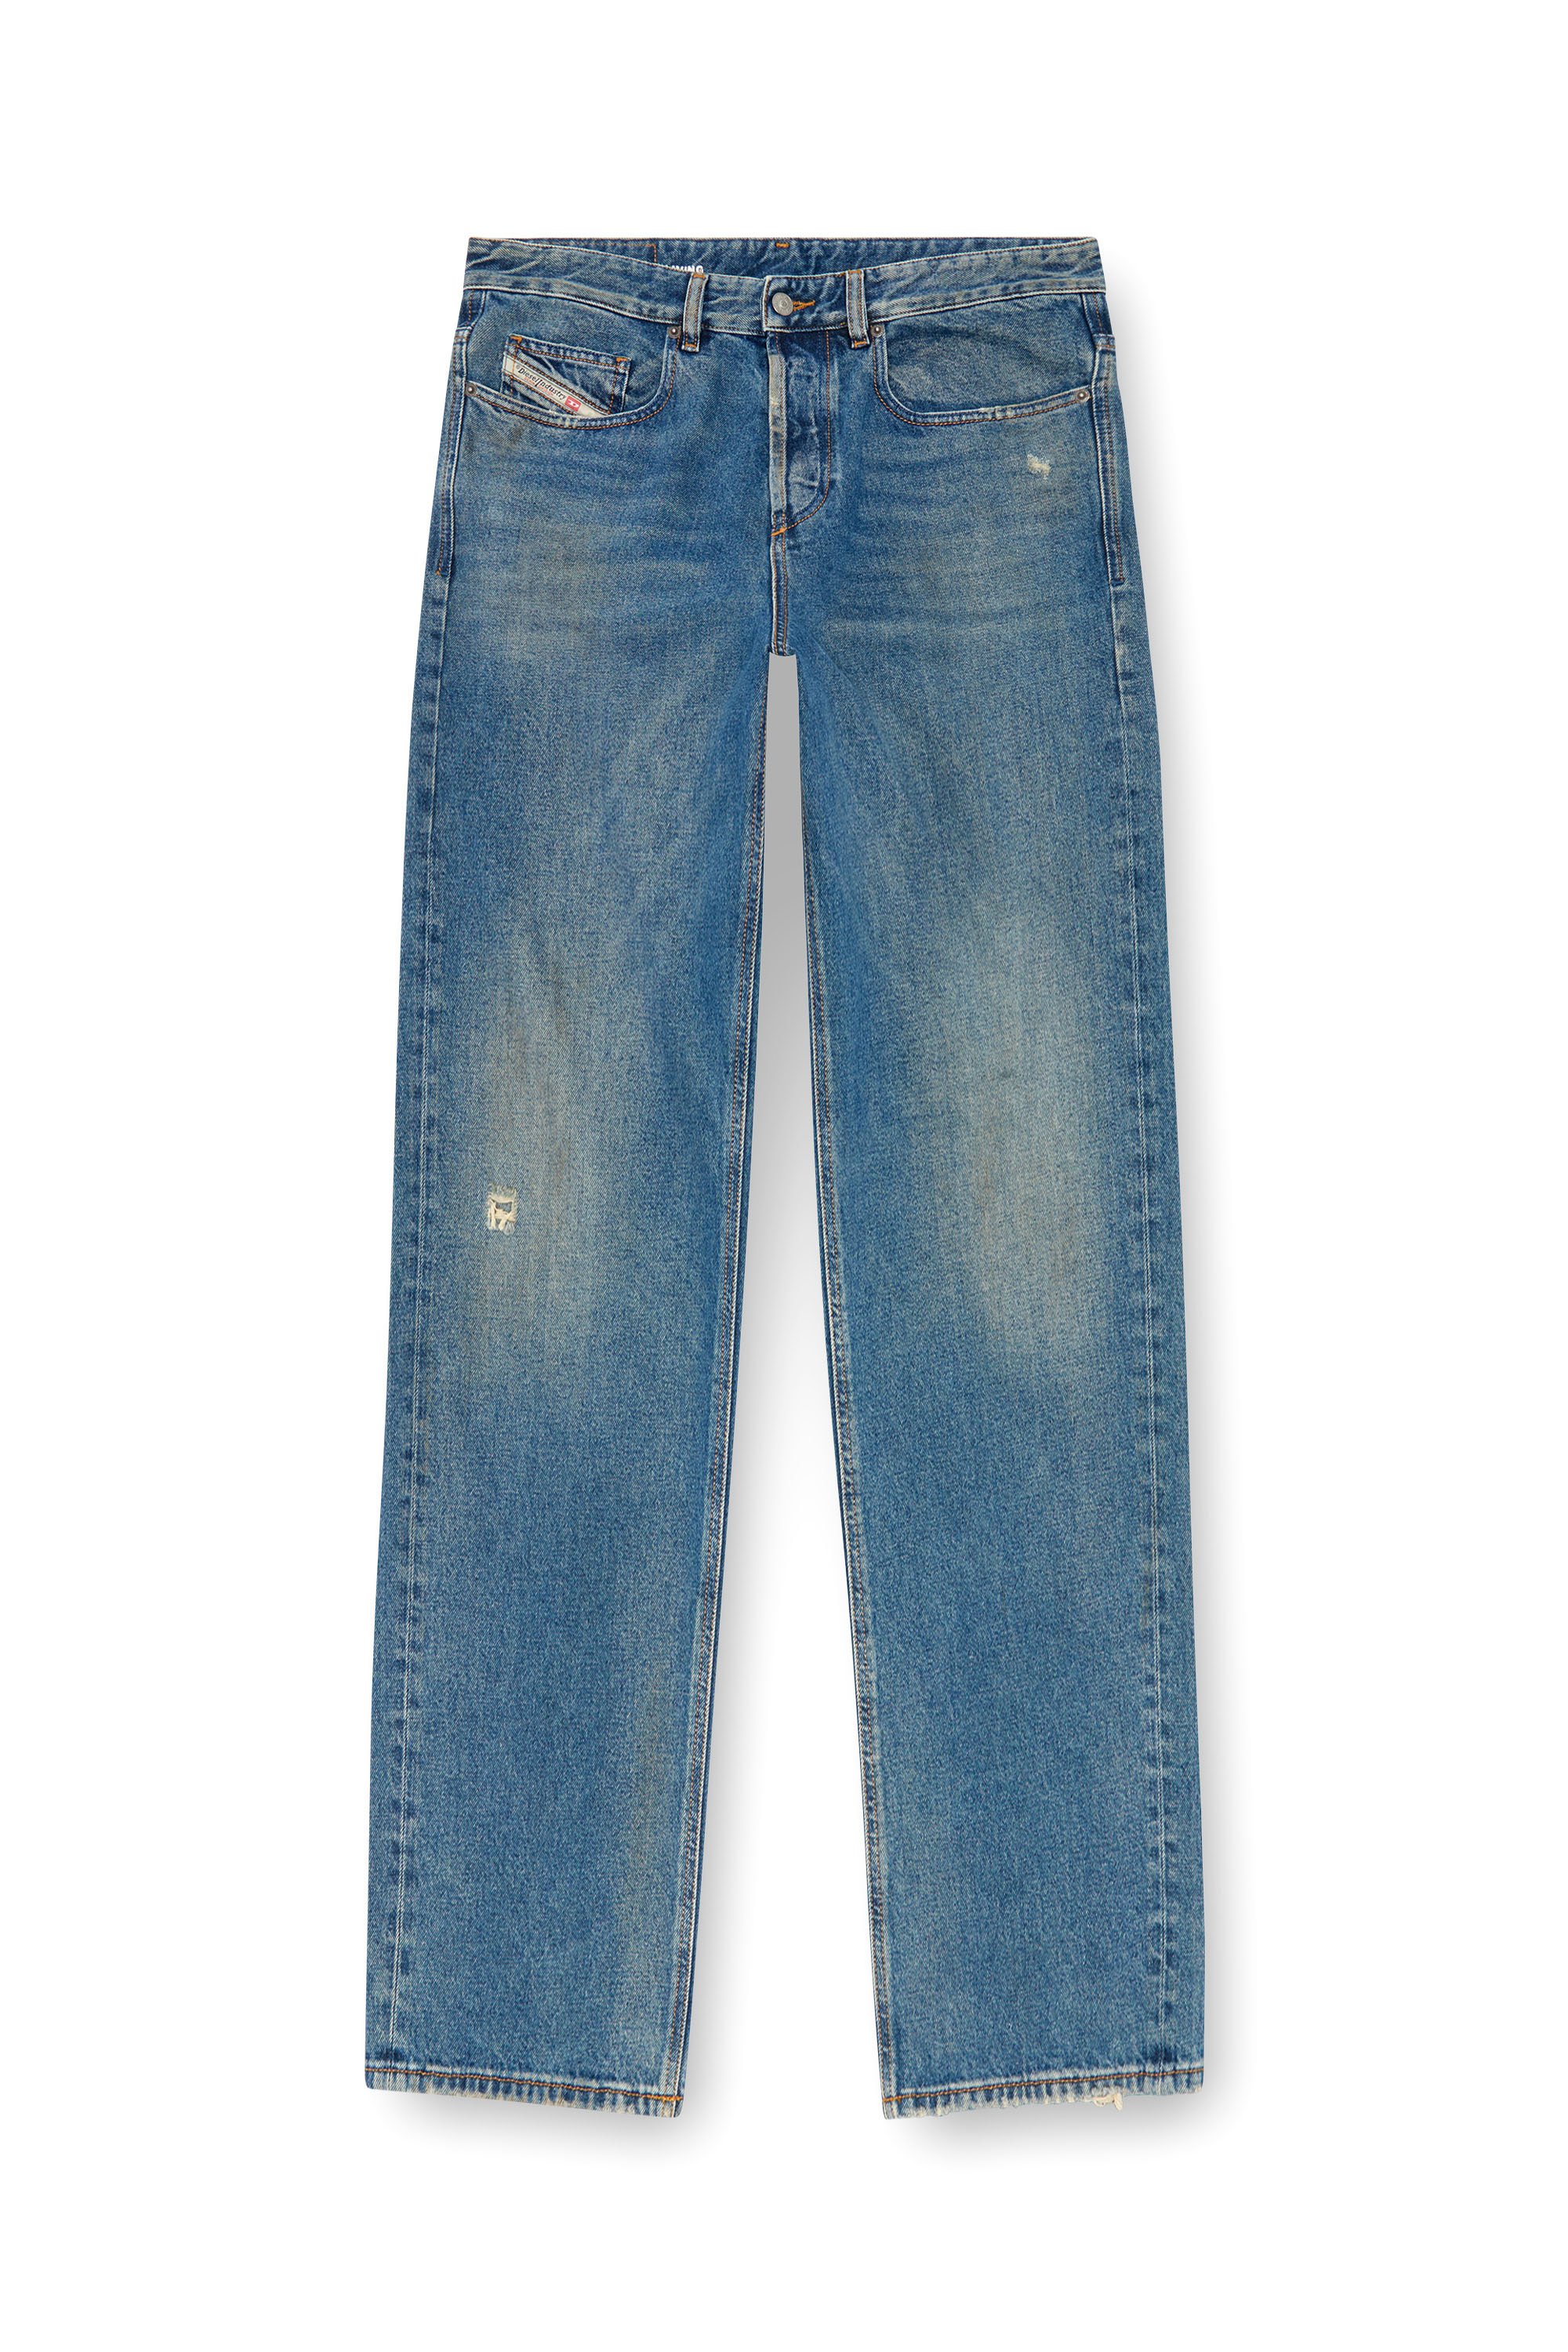 Diesel - Straight Jeans 2001 D-Macro 09J79, Hombre Straight Jeans - 2001 D-Macro in Azul marino - Image 6